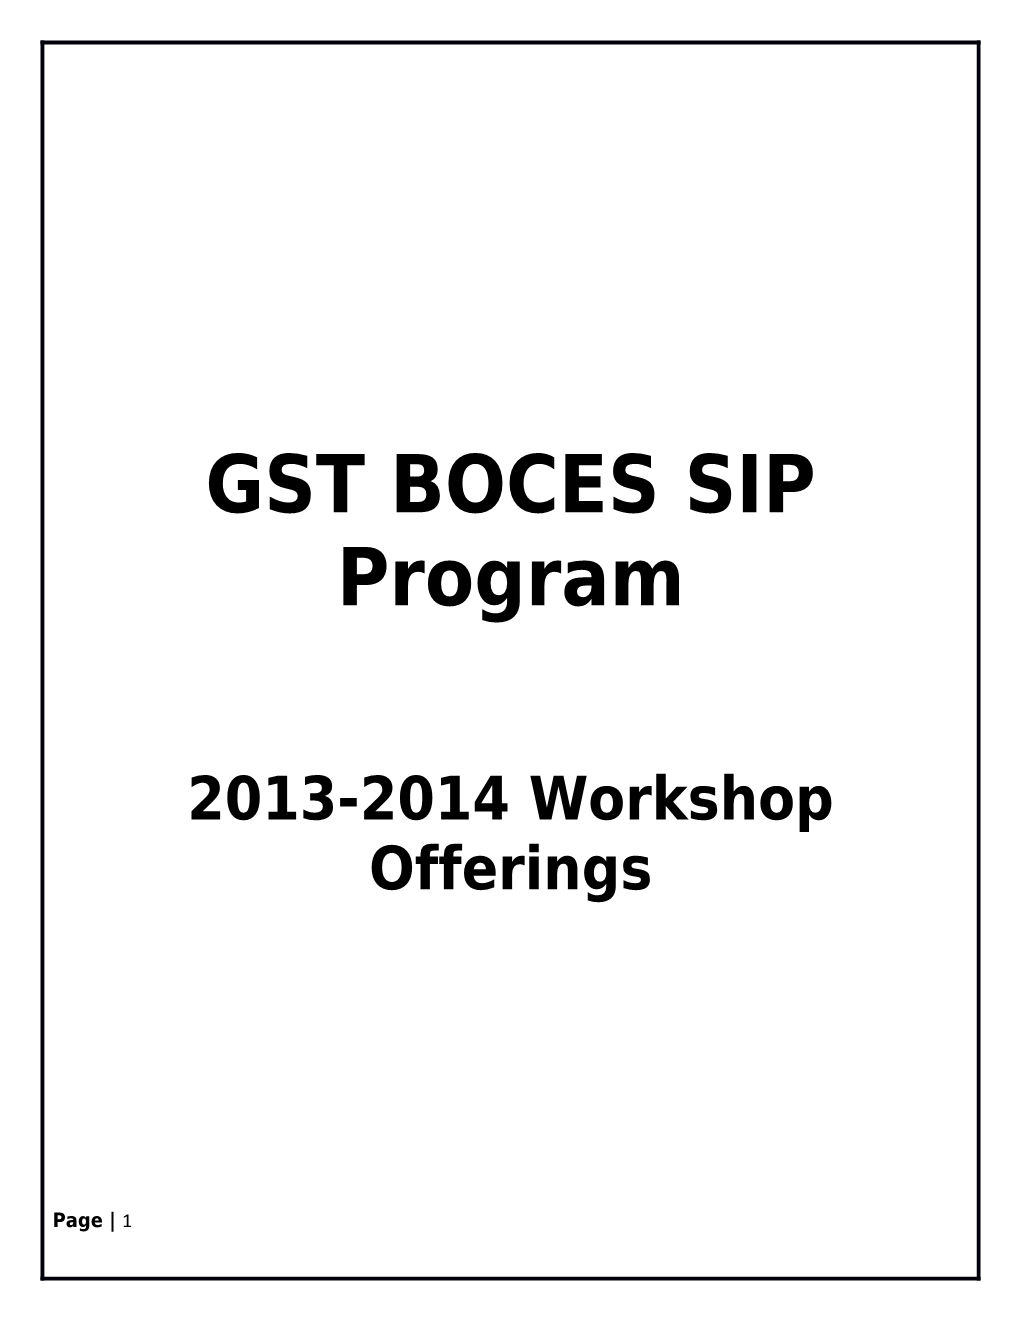 GST BOCES SIP Program